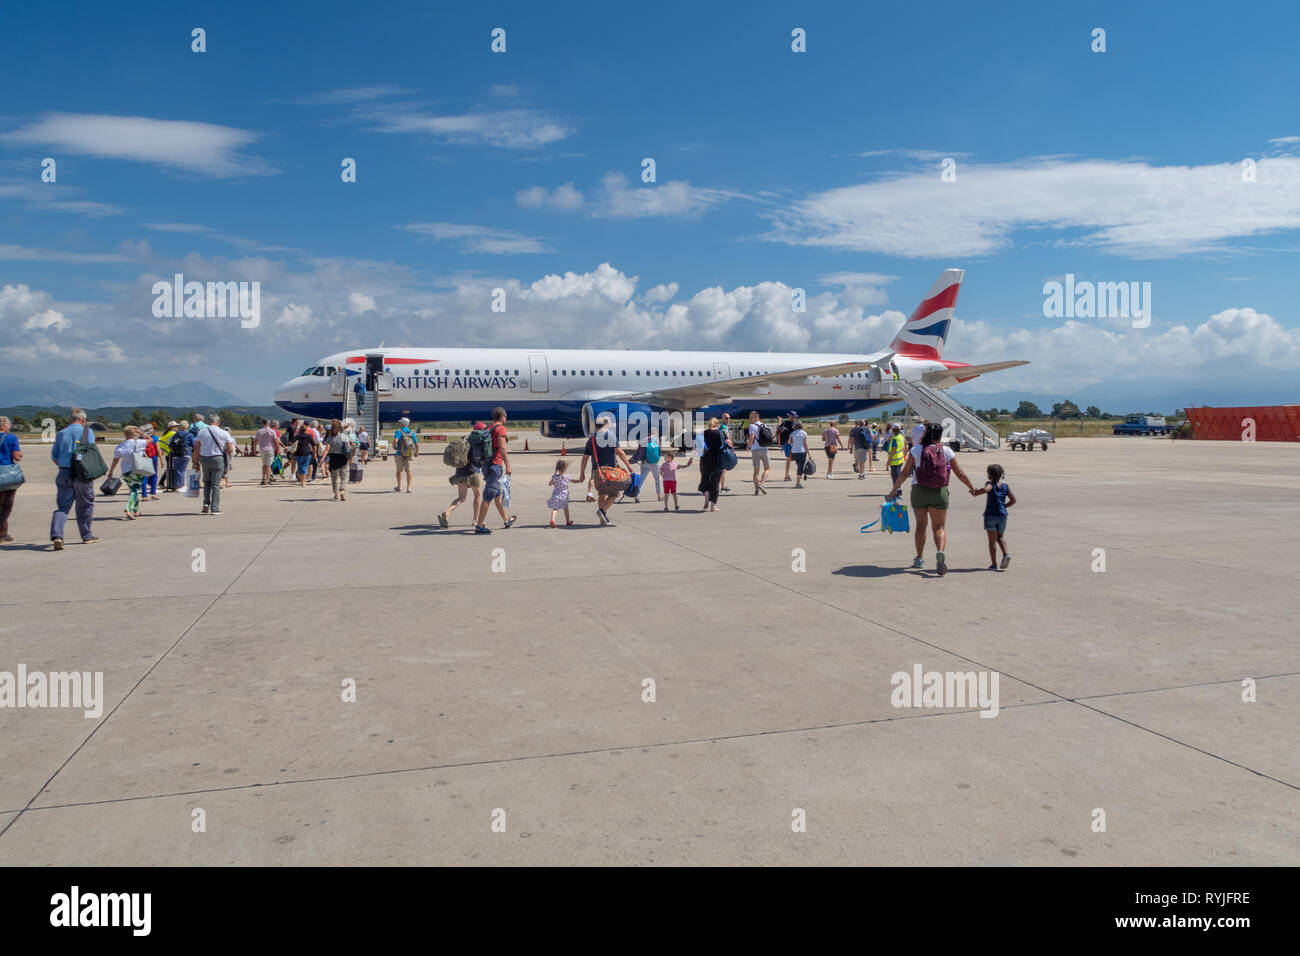 PREVEZA, GREECE - JUNE 10 2018: Passengers walking towards a British Airways airplane on Preveza airport tarmac in Greece Stock Photo